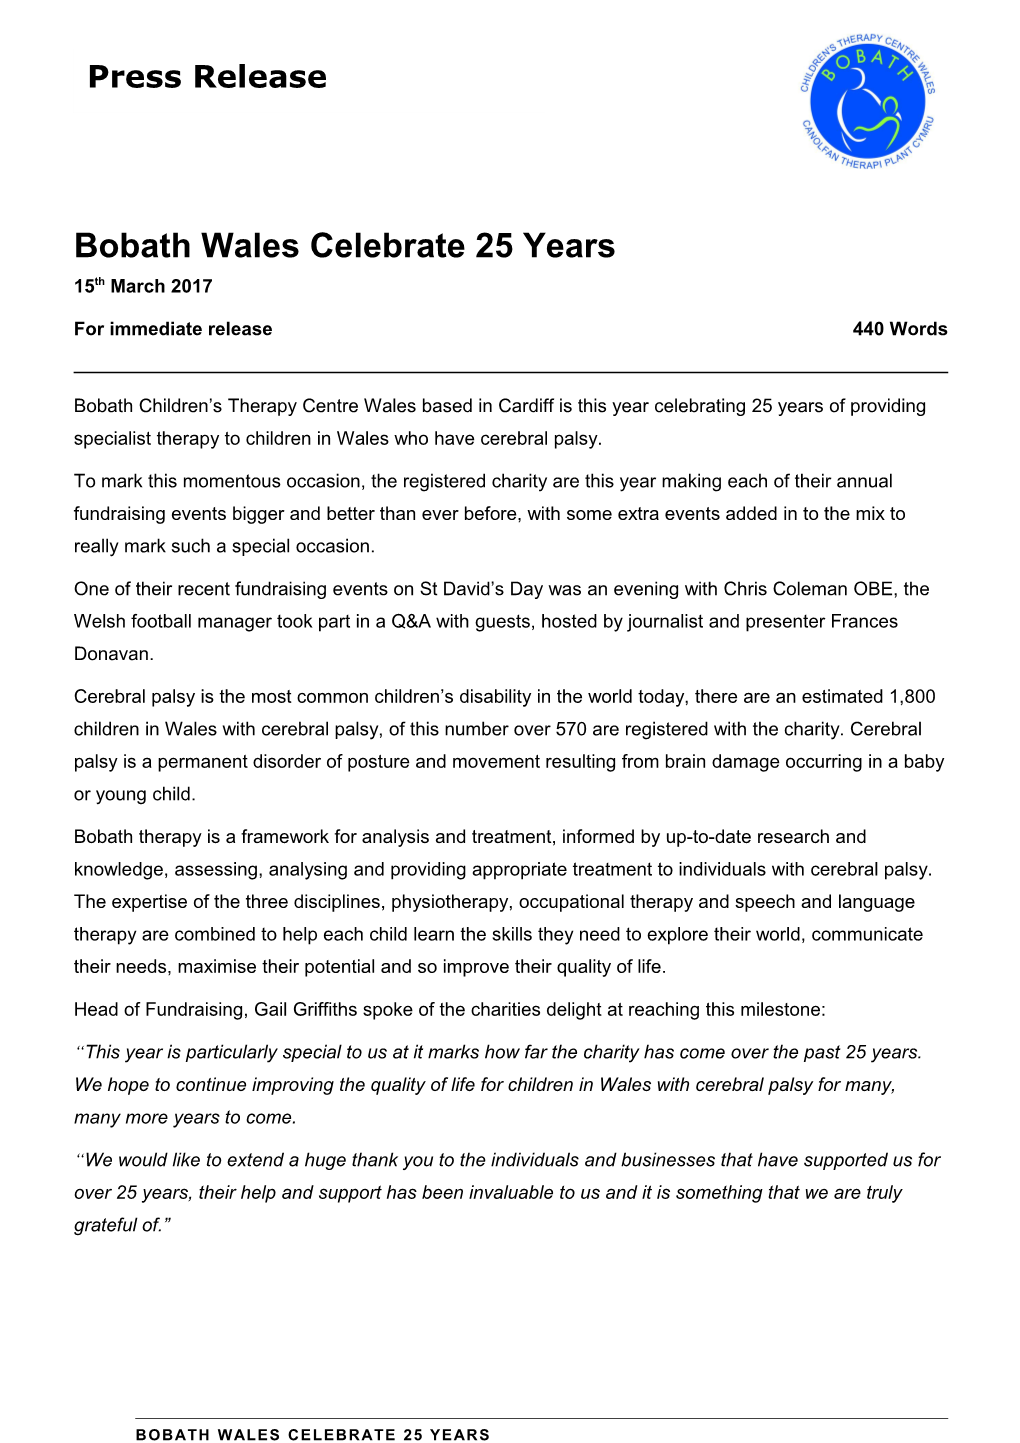 Bobath Wales Celebrate 25 Years